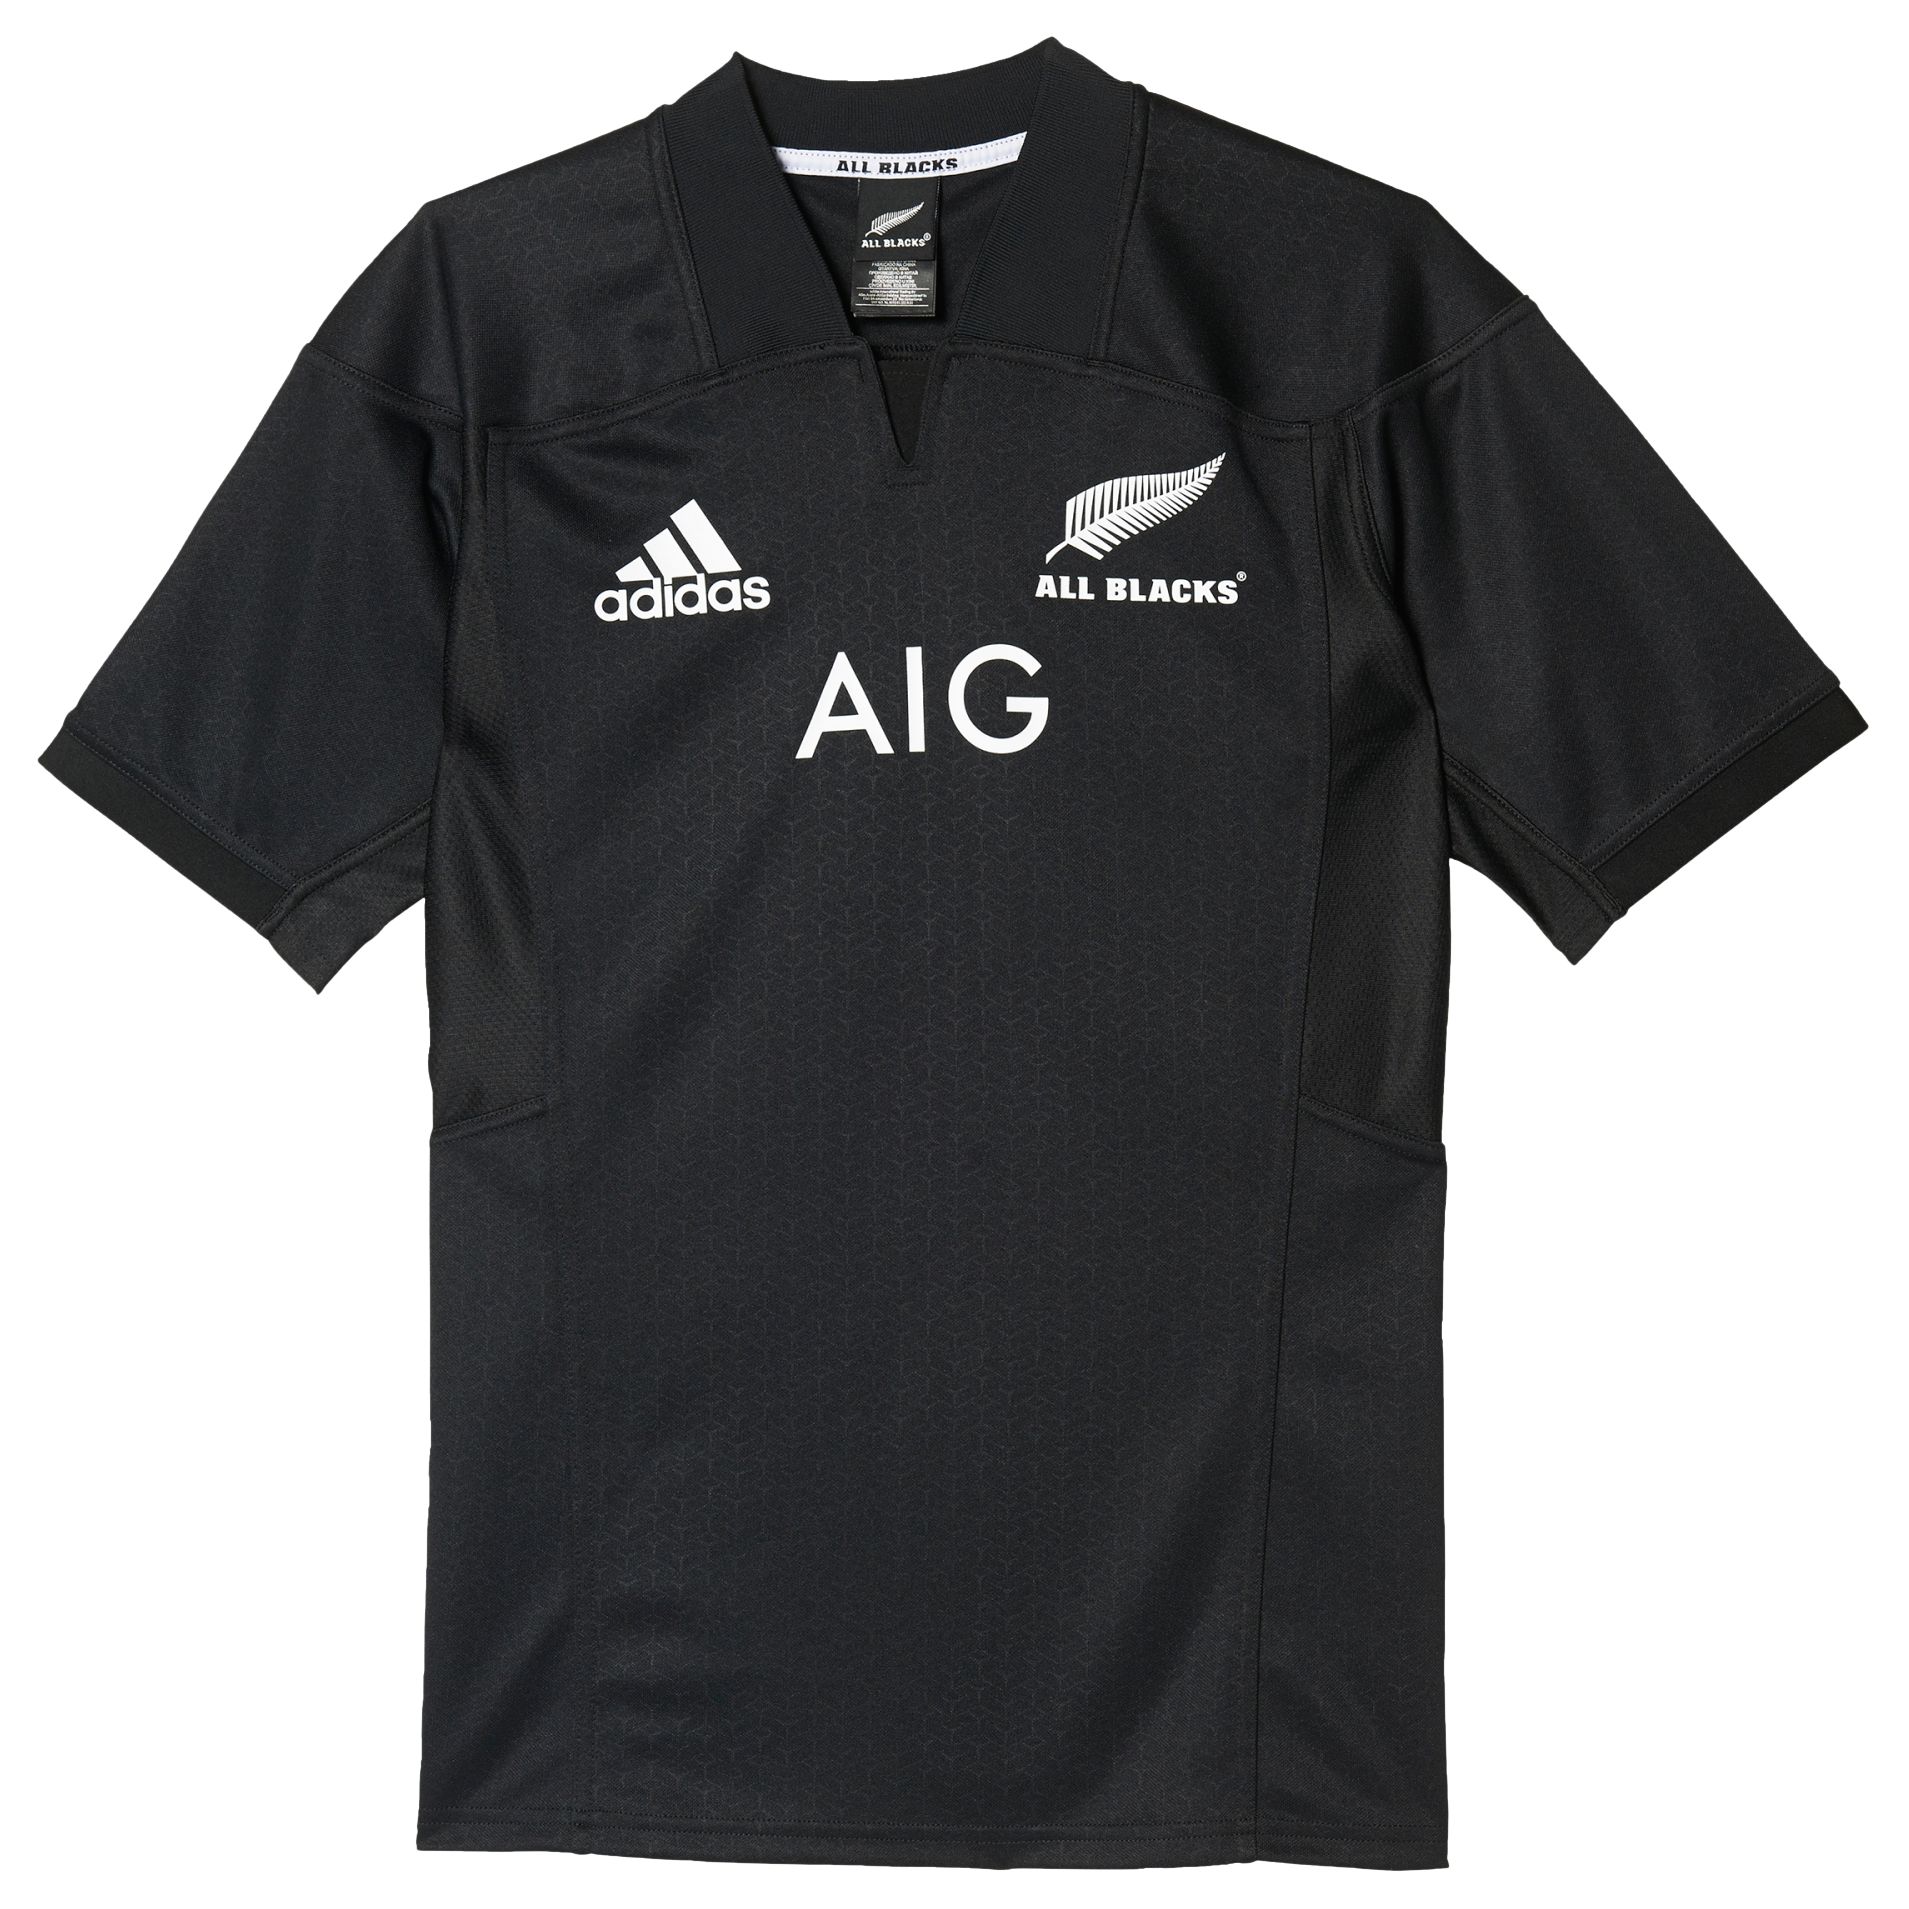 Adidas New Zealand All Blacks 2016/17 Home Rugby Shirt, Black